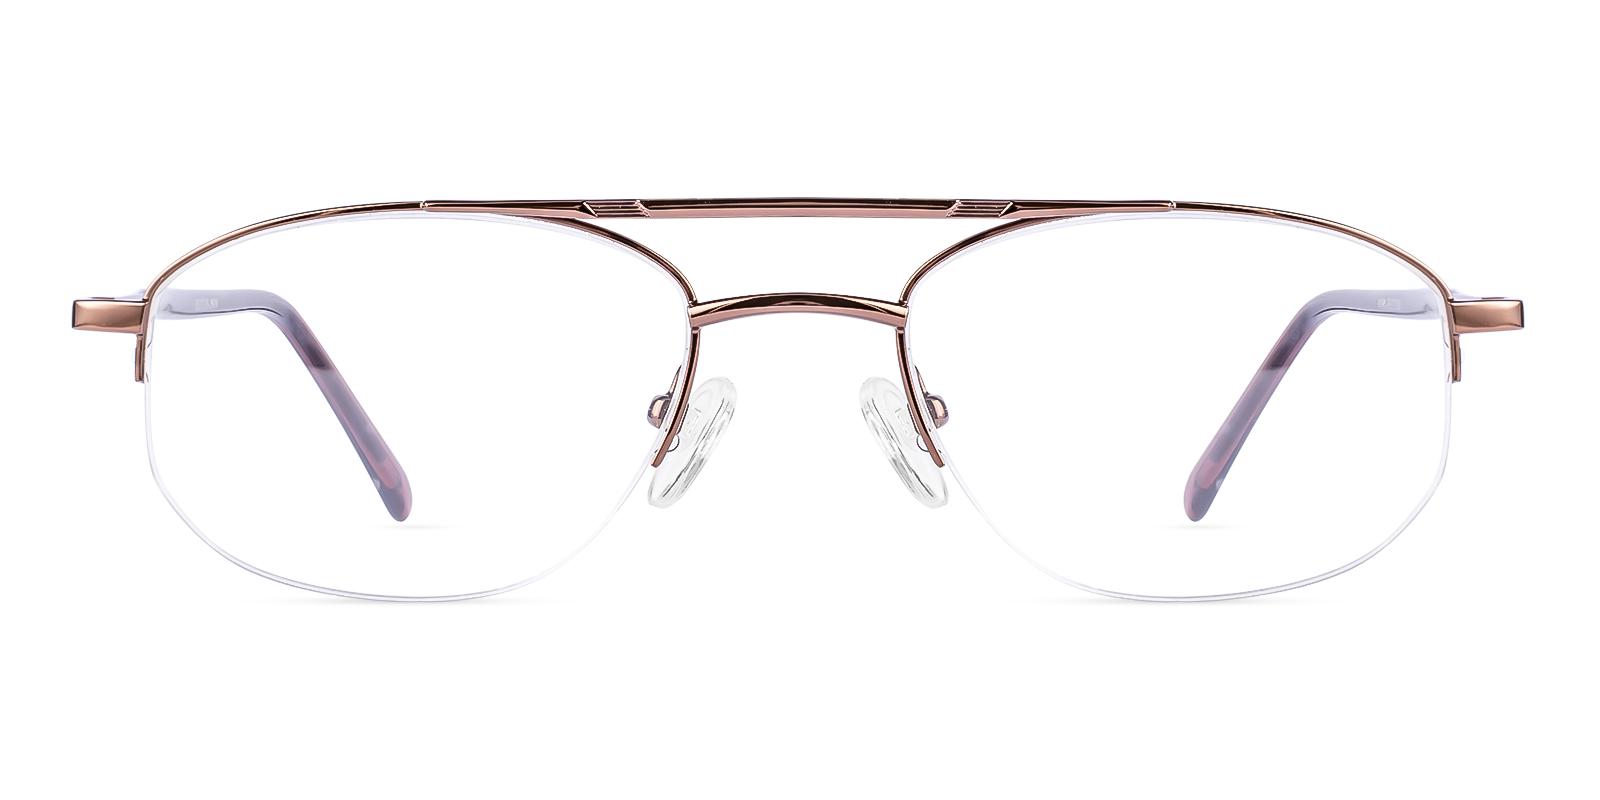 Someifu Brown Metal Eyeglasses , NosePads , SpringHinges Frames from ABBE Glasses